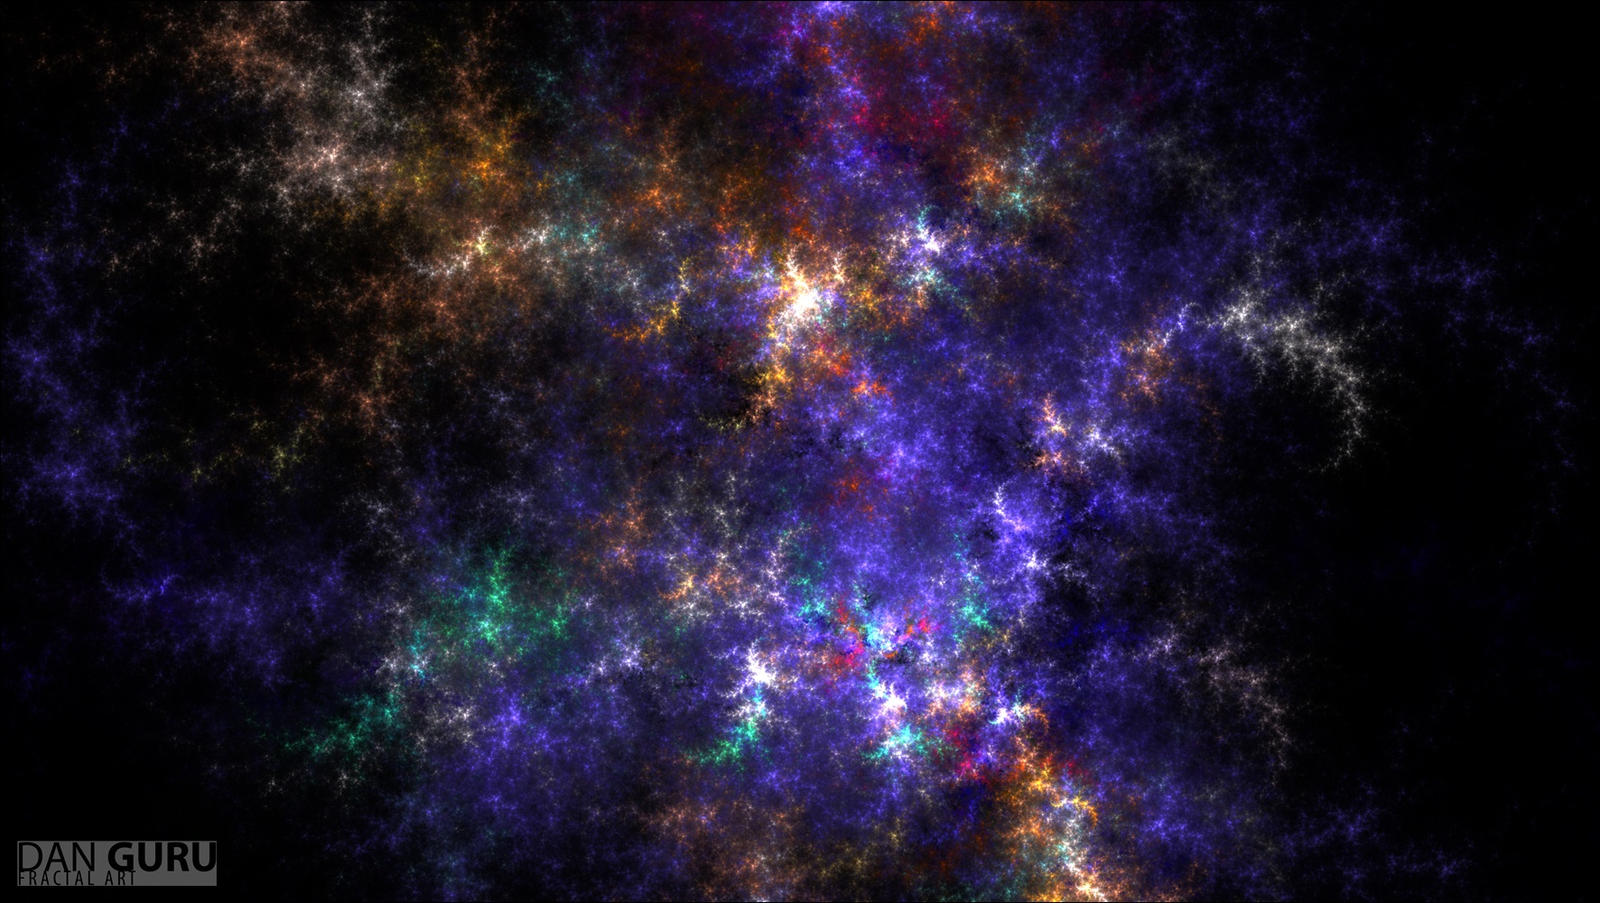 The Apo Nebula